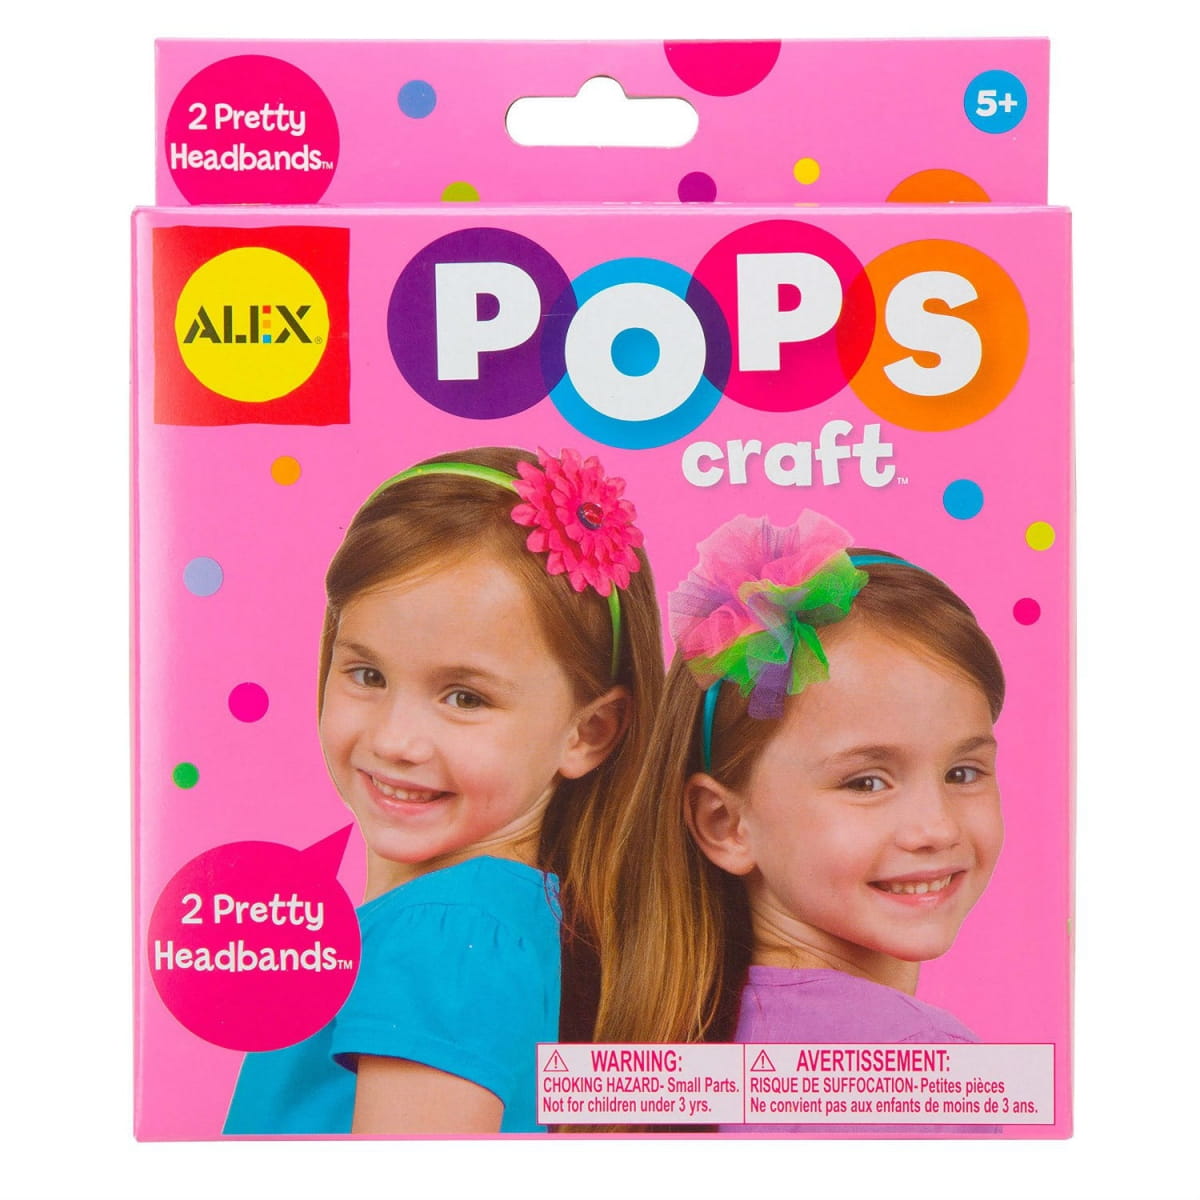     Pops Craft    (Alex)